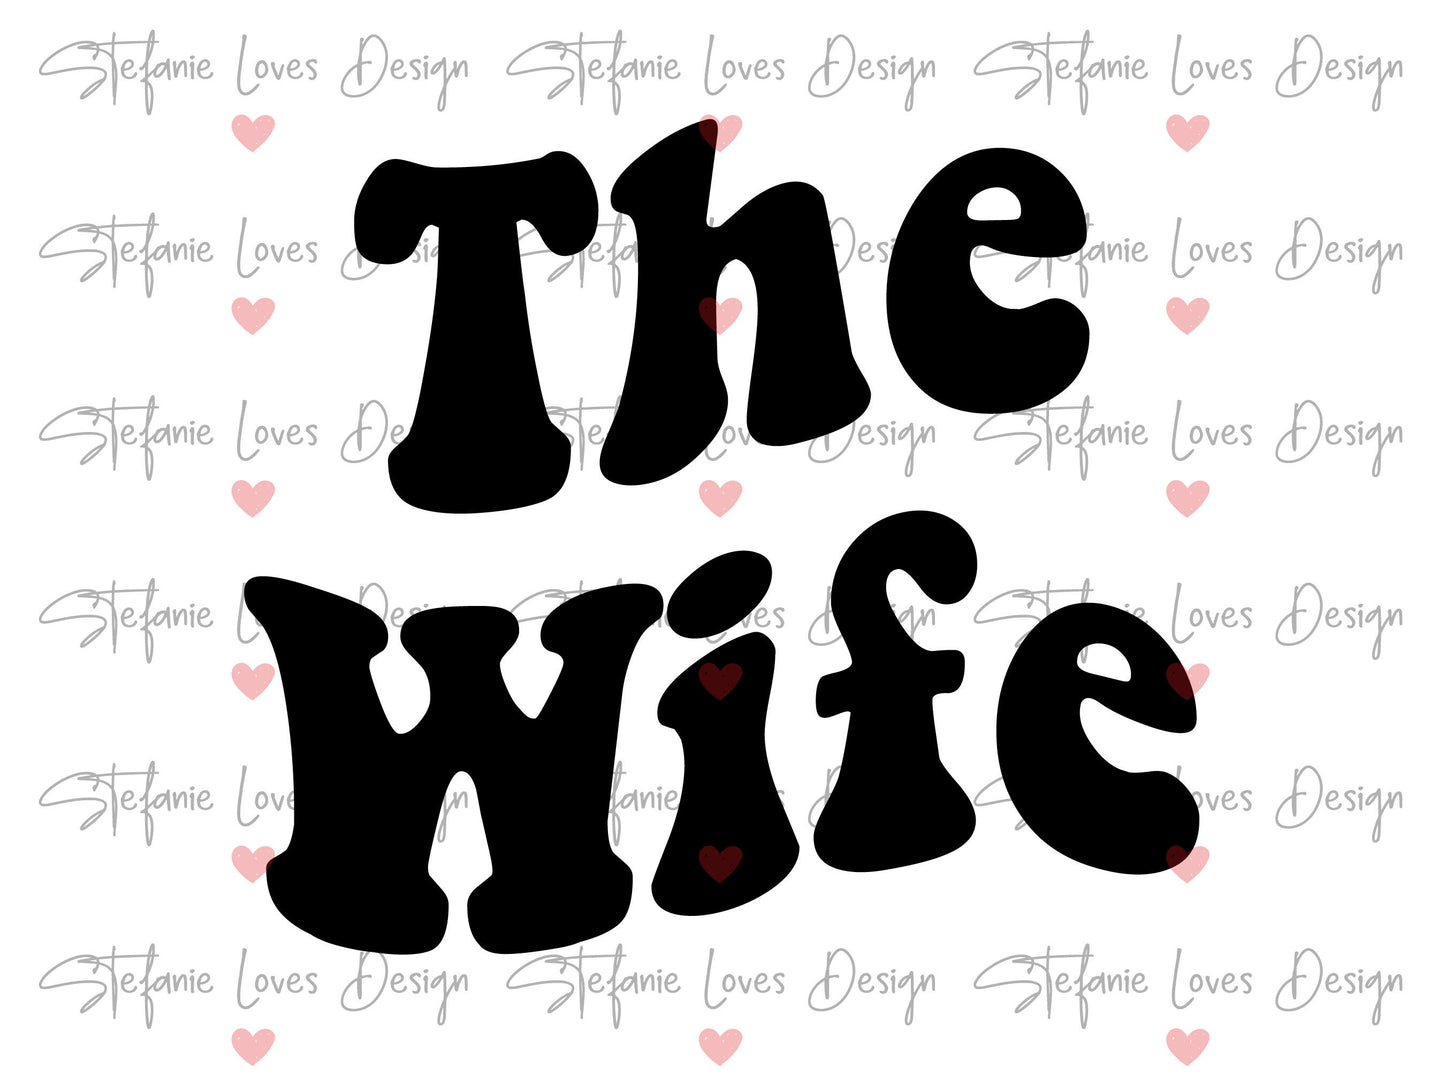 The Wife svg, Wifey svg, Digital Design